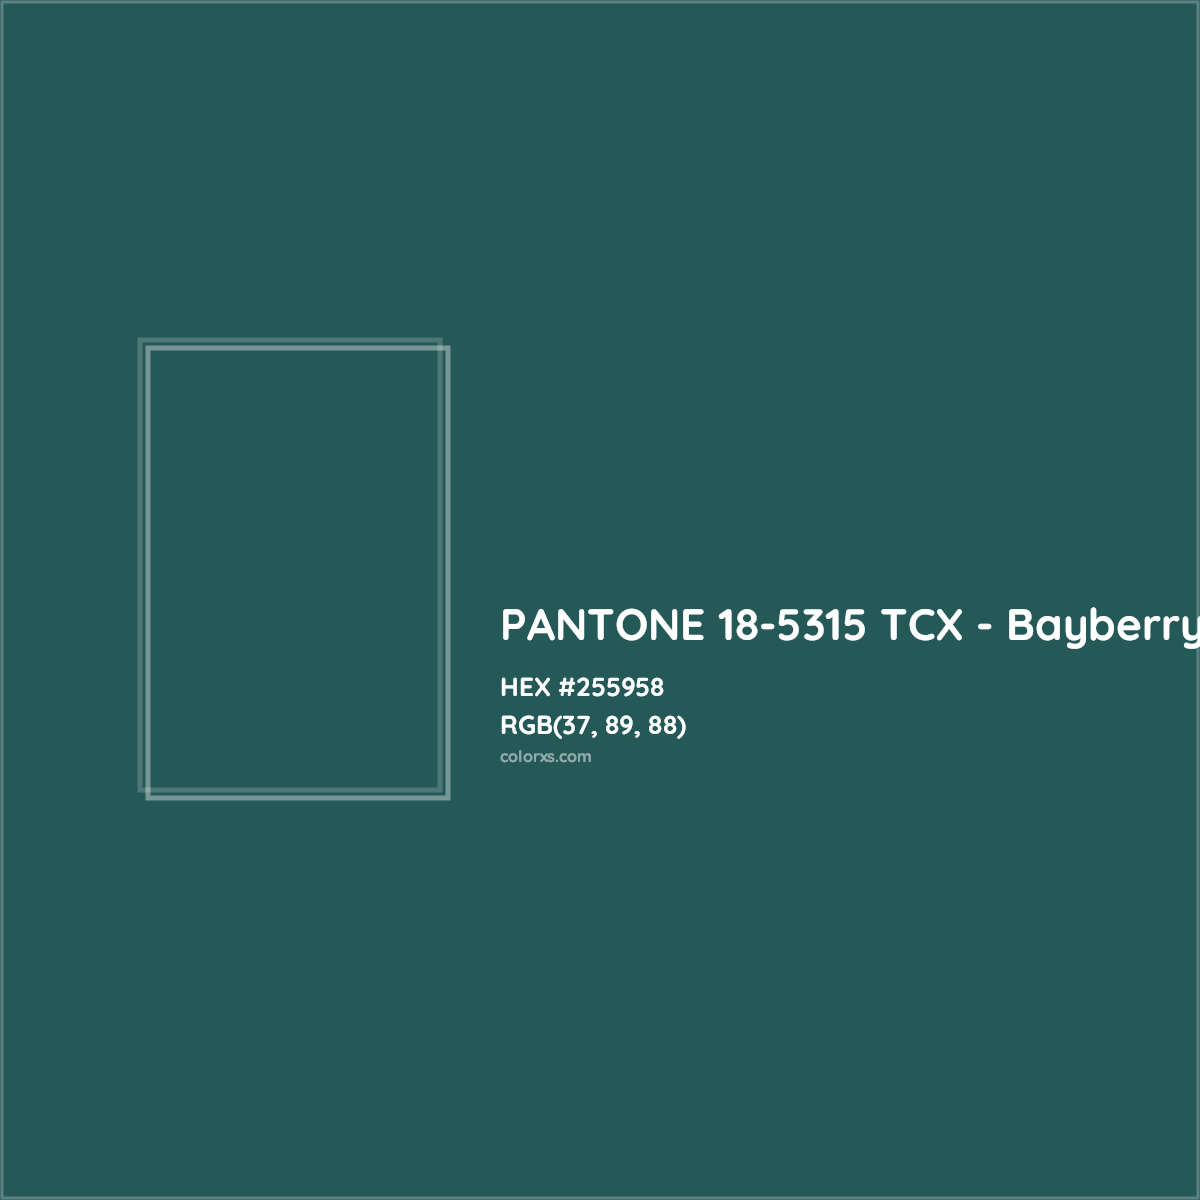 HEX #255958 PANTONE 18-5315 TCX - Bayberry CMS Pantone TCX - Color Code